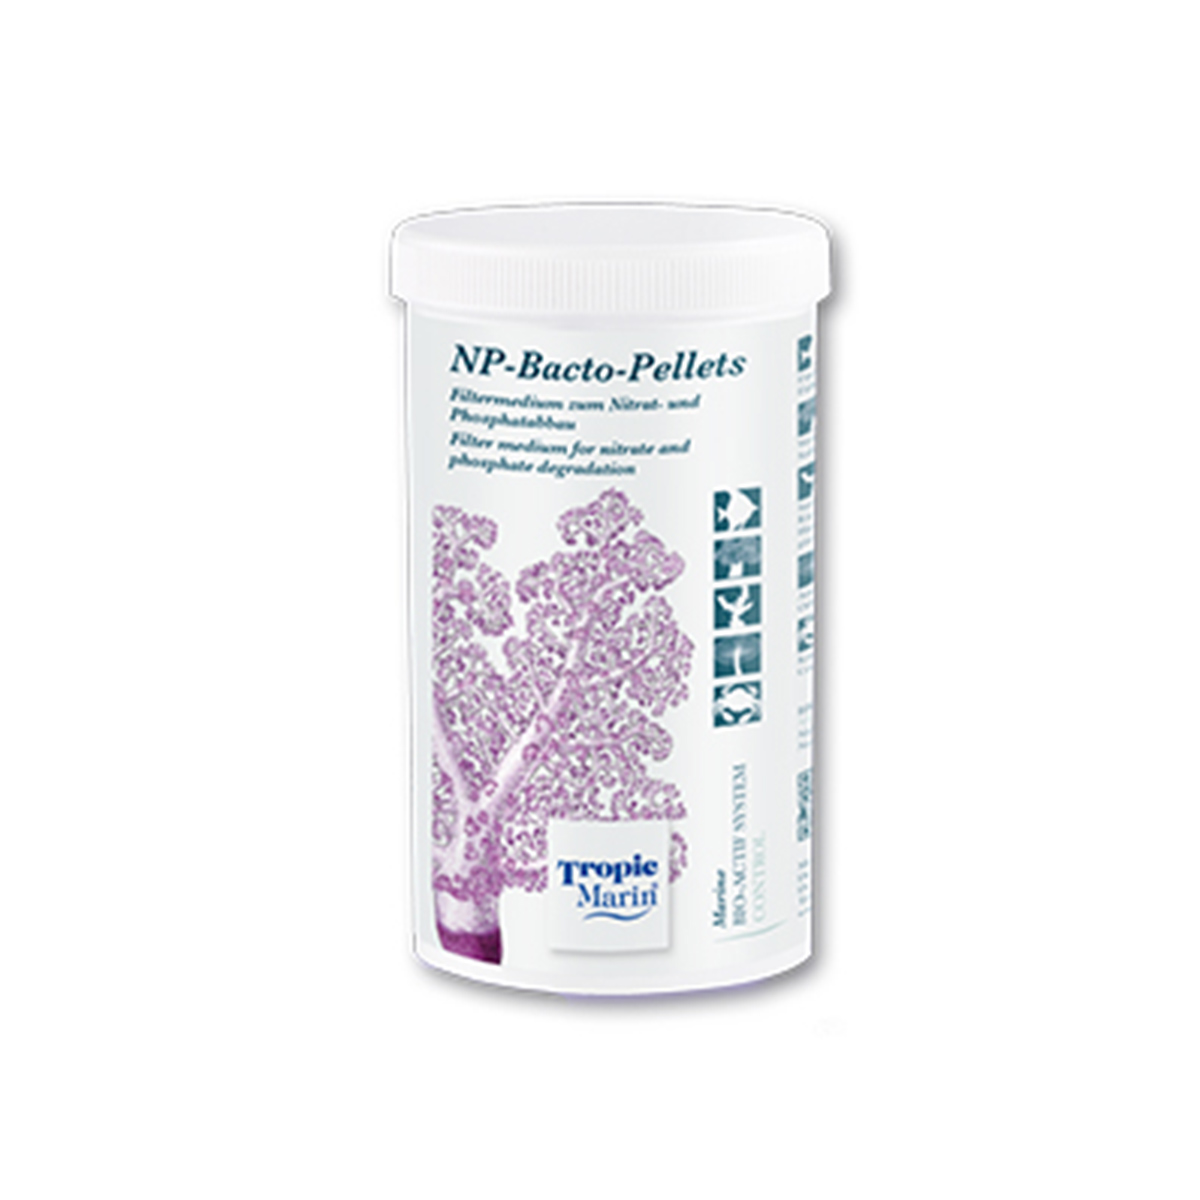 Tropic Marin® NP-BACTO-PELLETS 500 ml